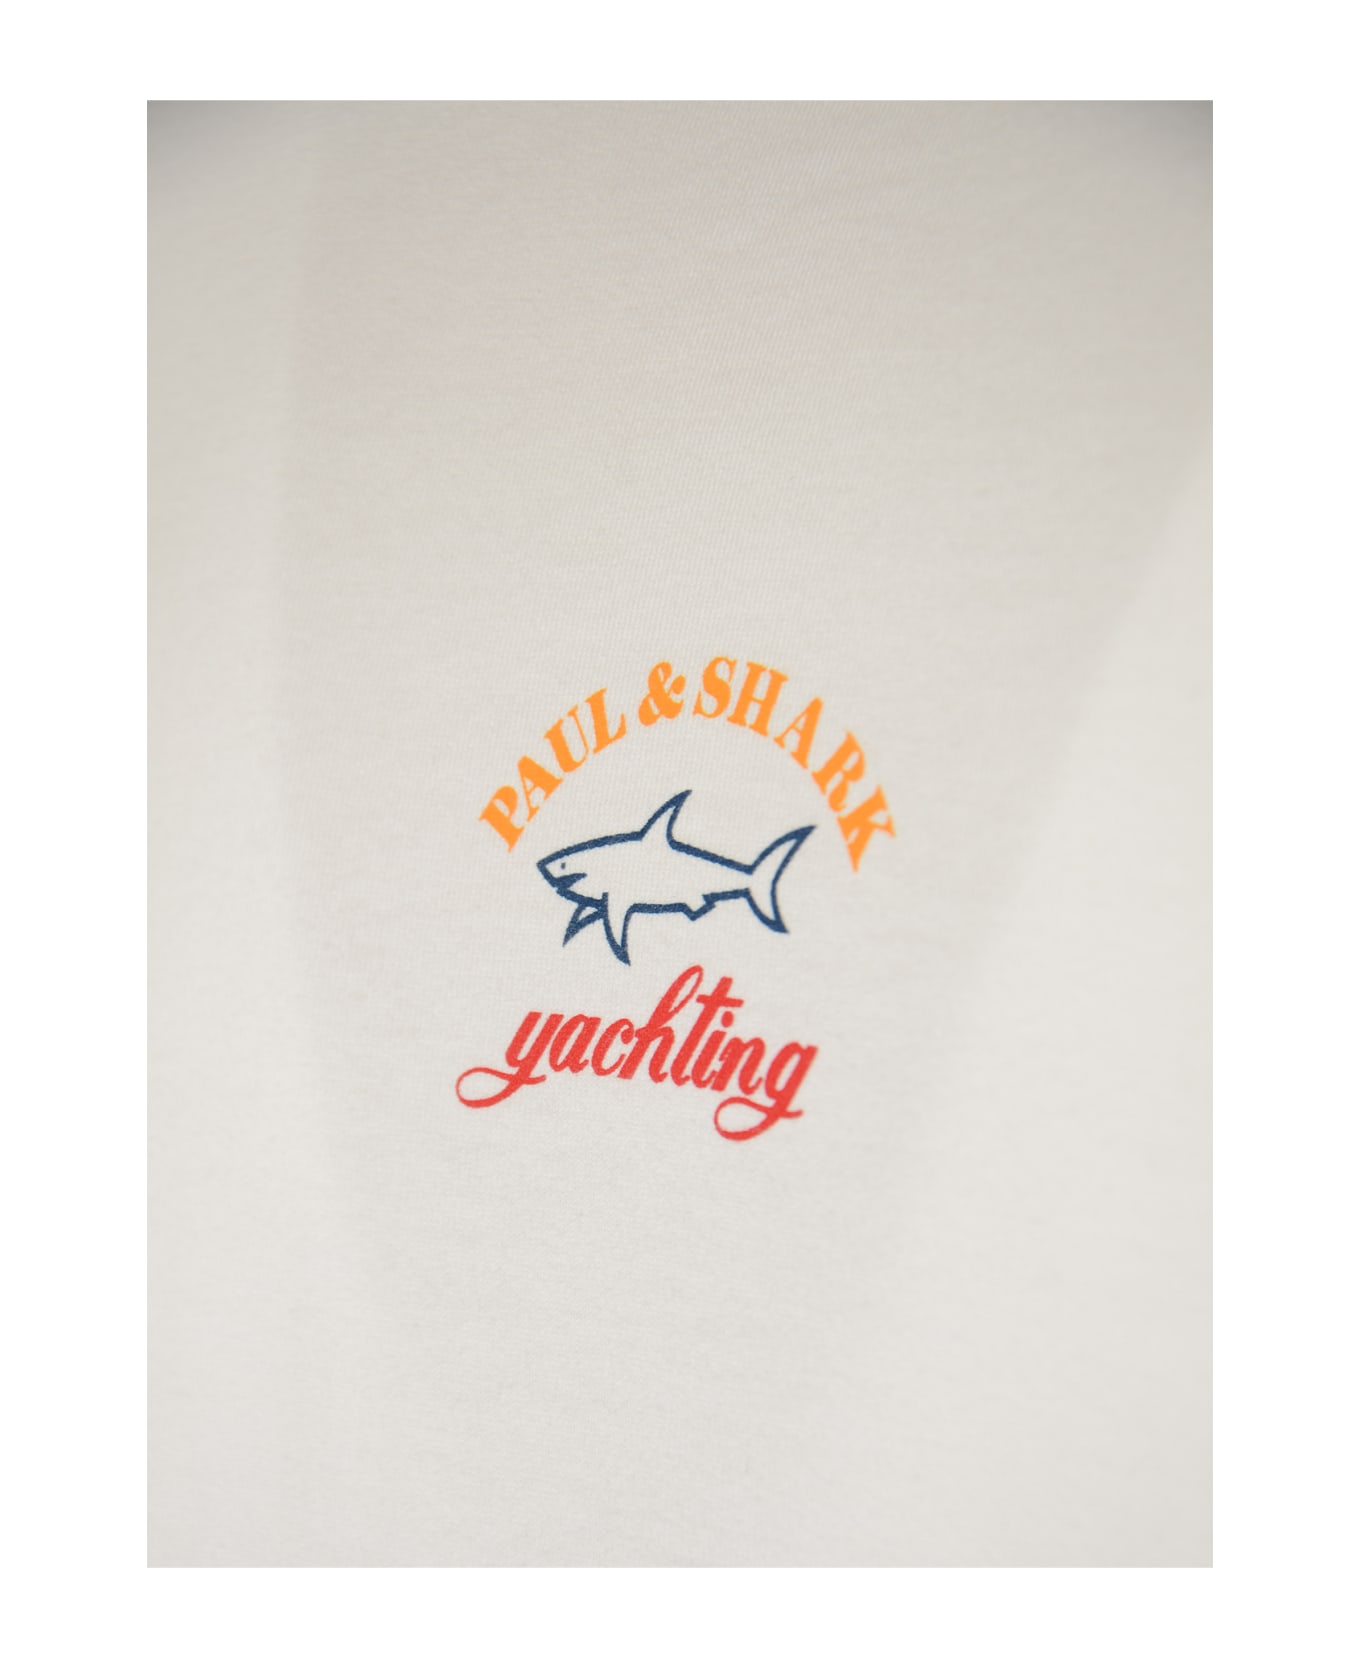 Paul&Shark Logo Print T-shirt - White シャツ